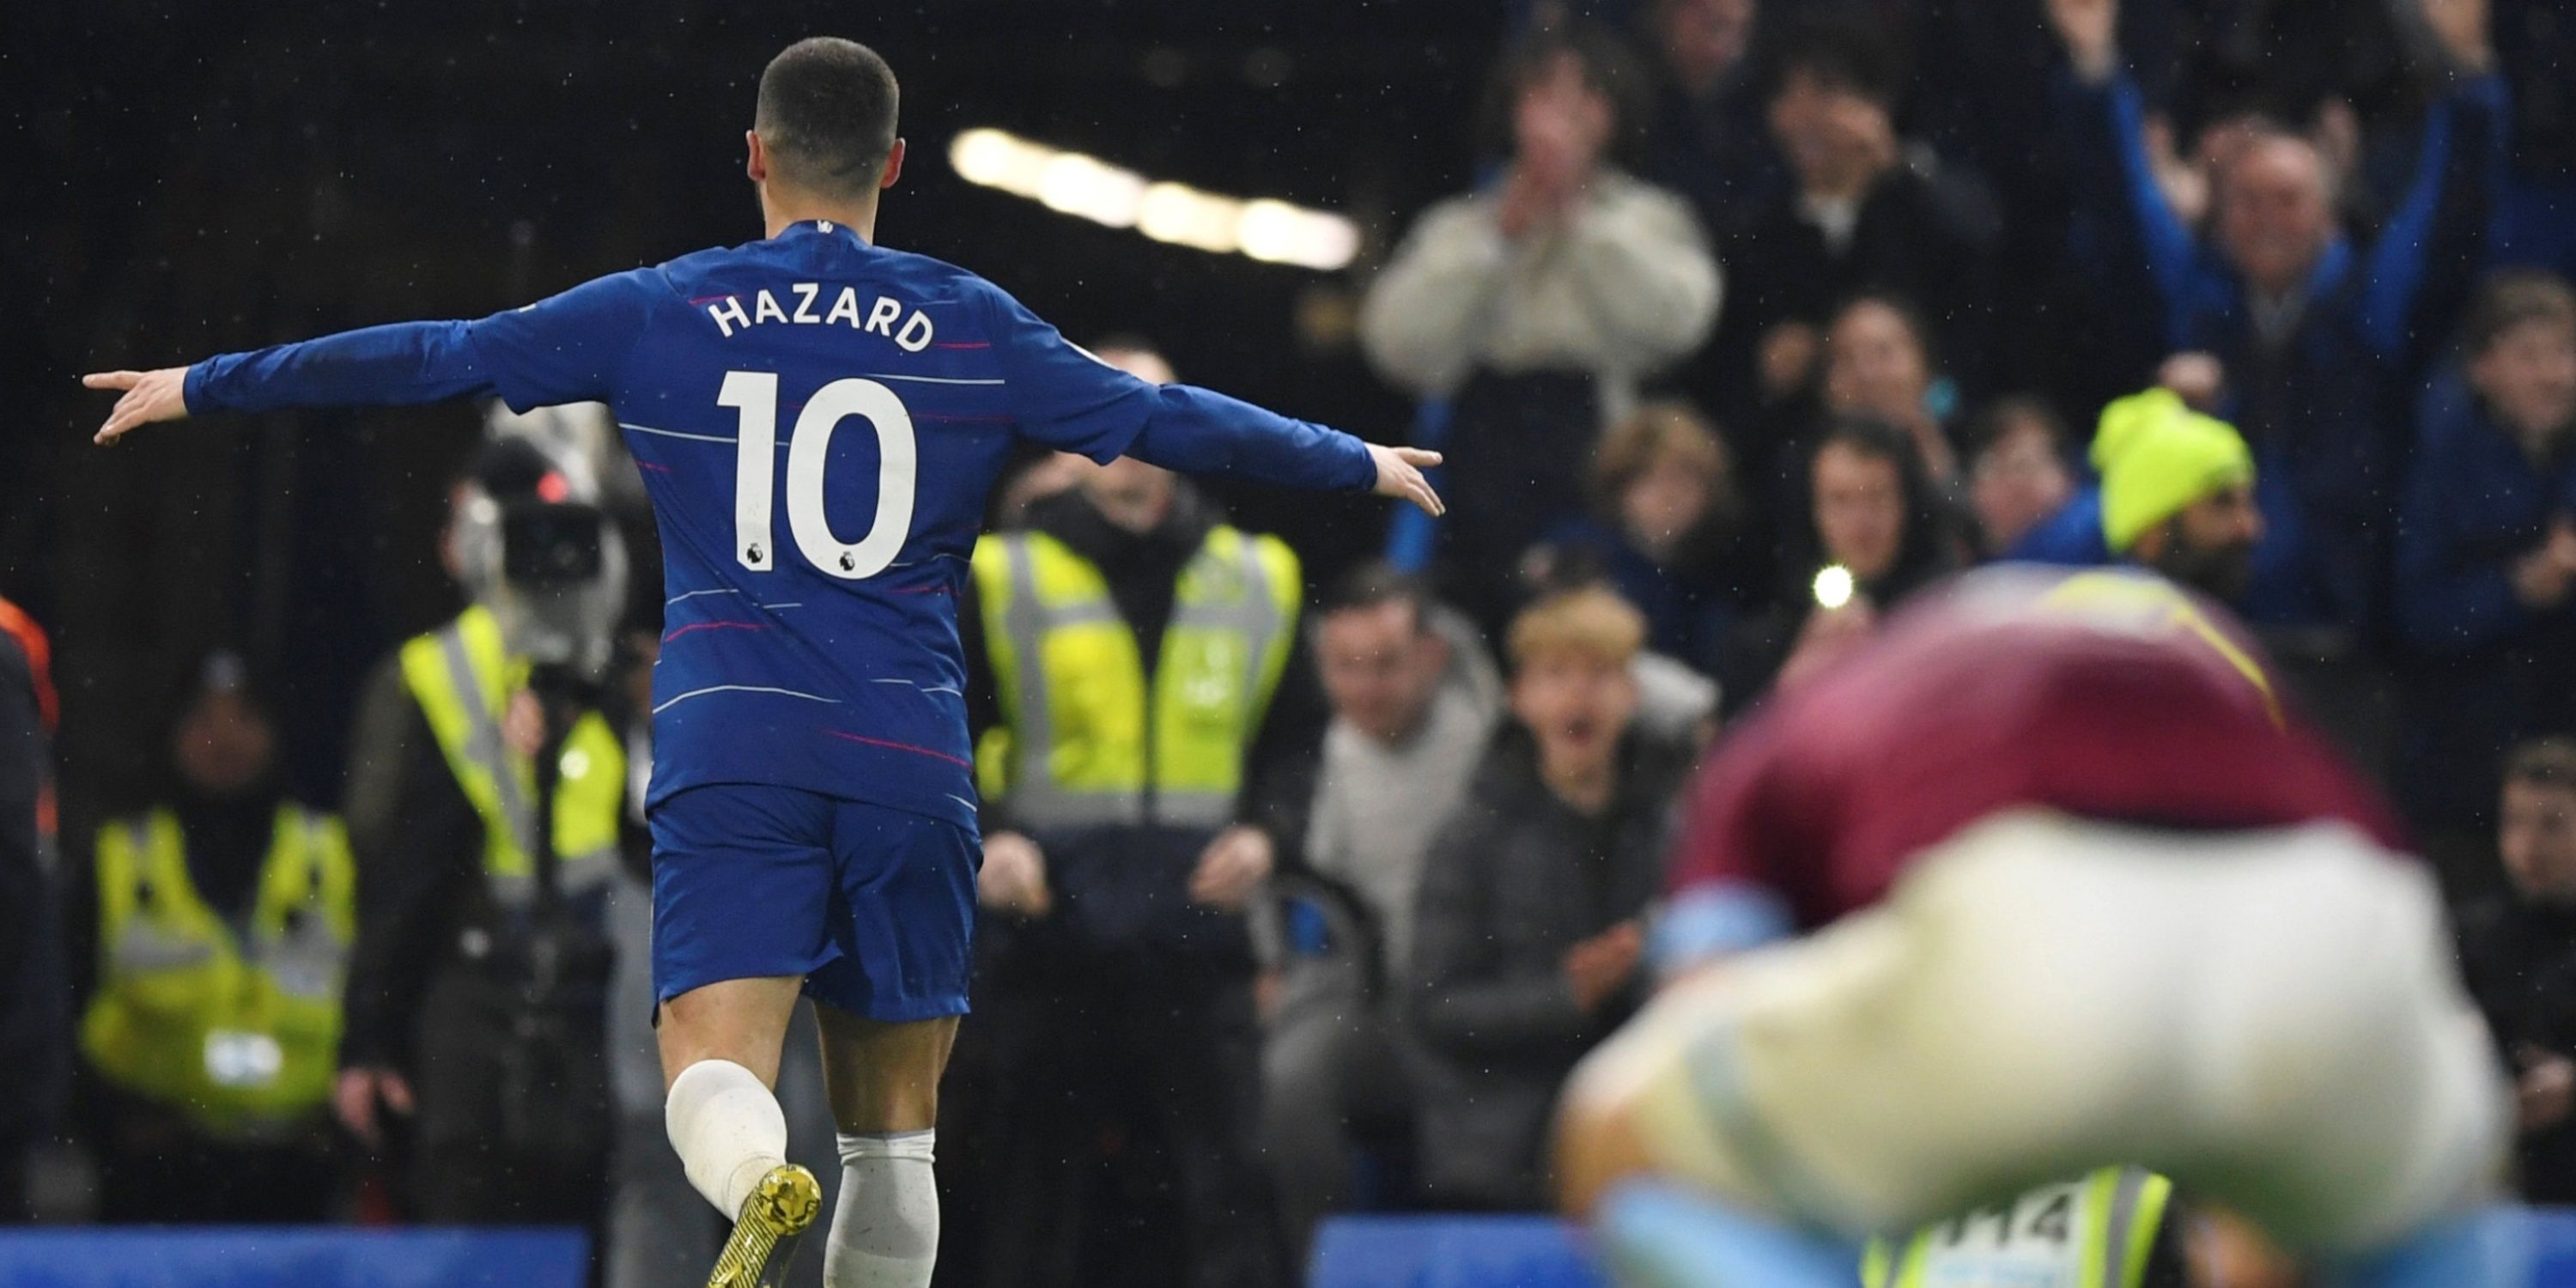 Chelsea's Eden Hazard celebrates scoring against West Ham.